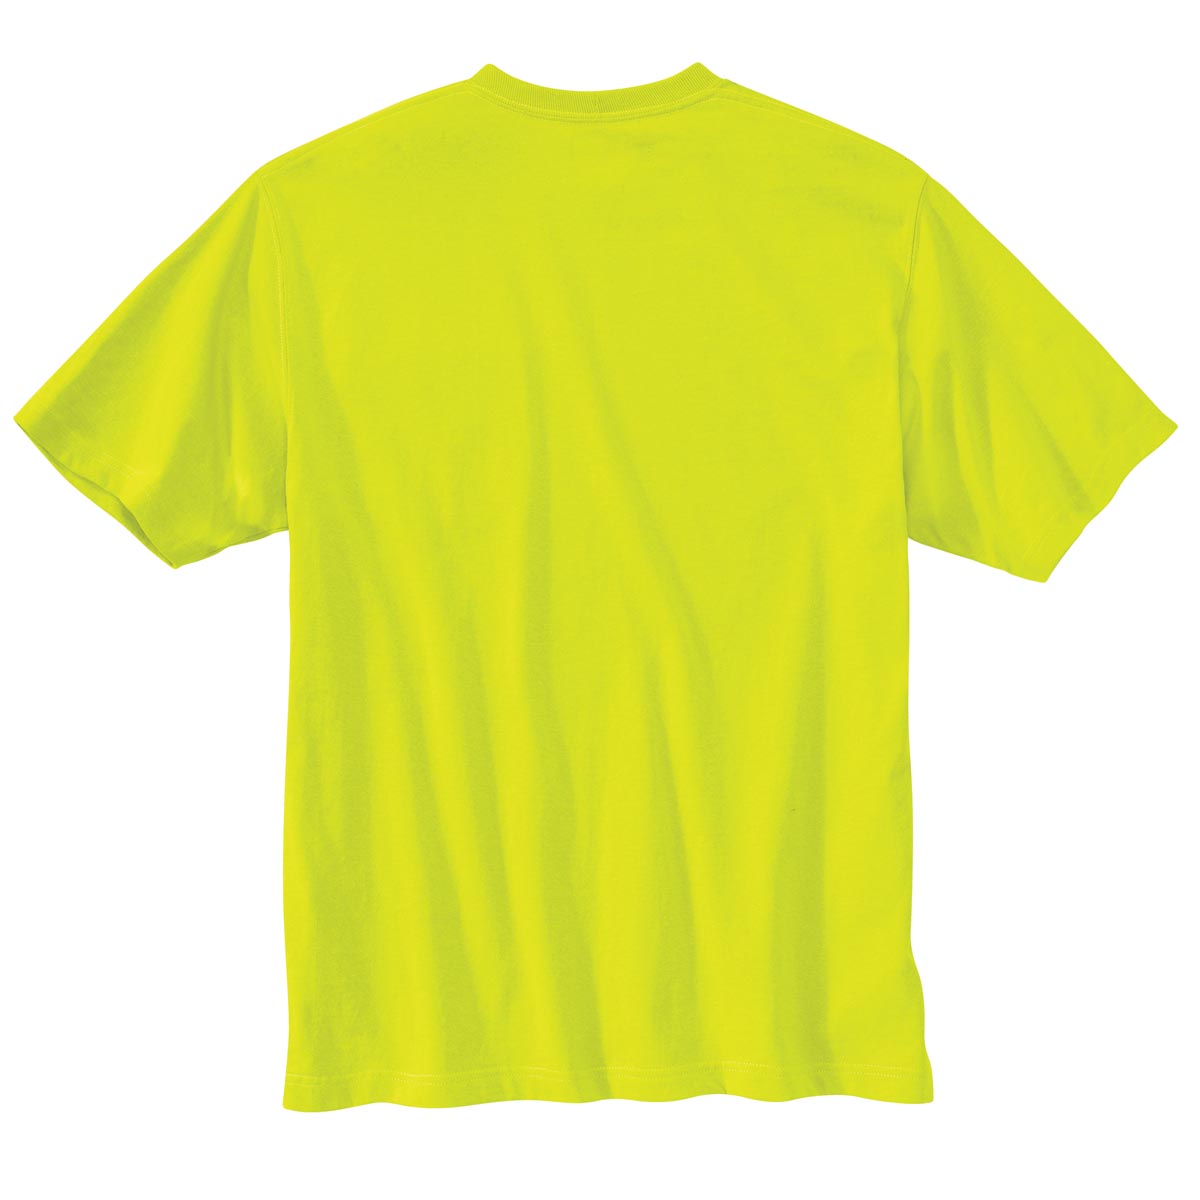 Carhartt Men's Loose Fit Heavyweight Short-Sleeve Fish Graphic T-Shirt